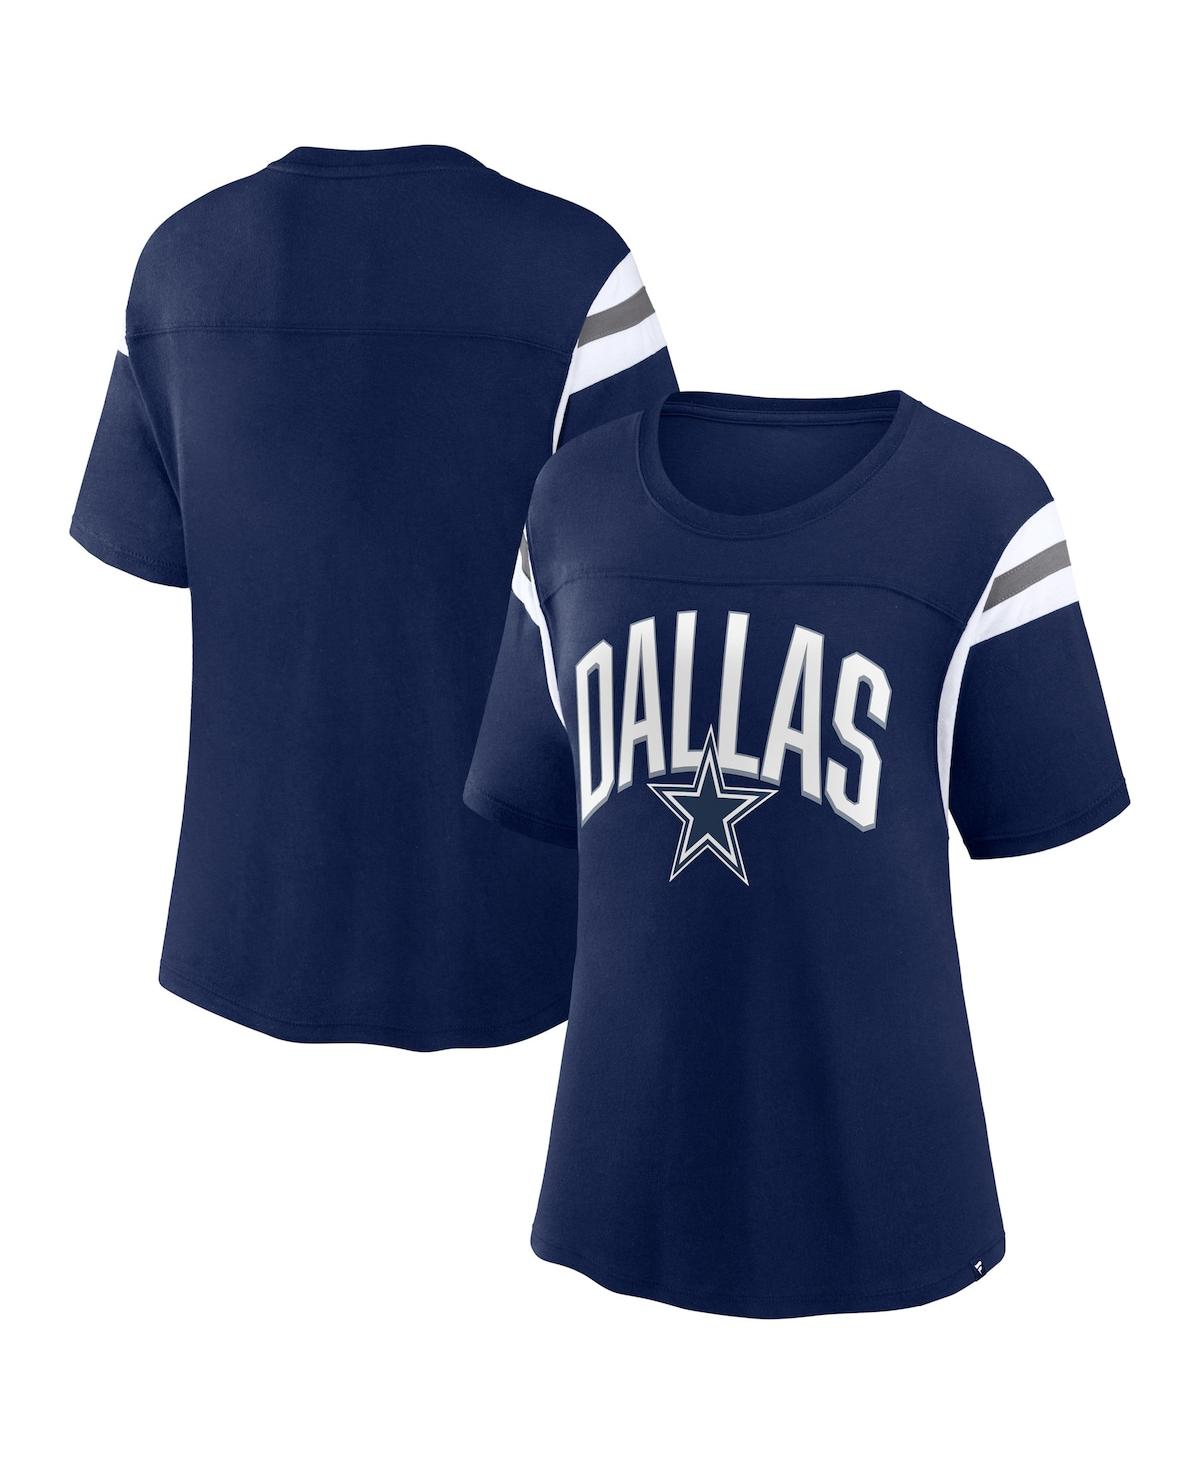 Fanatics Women's  Navy Dallas Cowboys Earned Stripes T-shirt